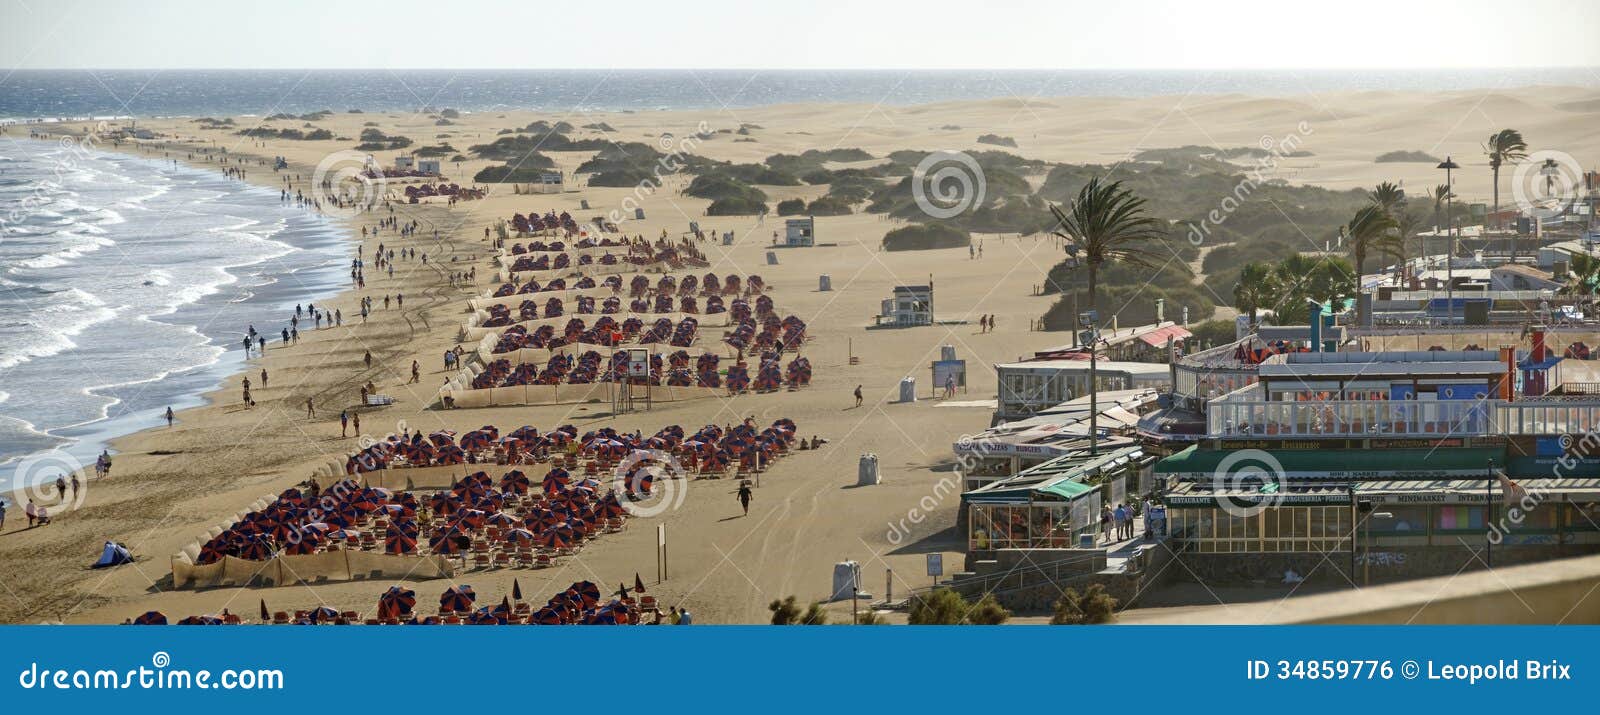 beach of playa del ingles with sunshades